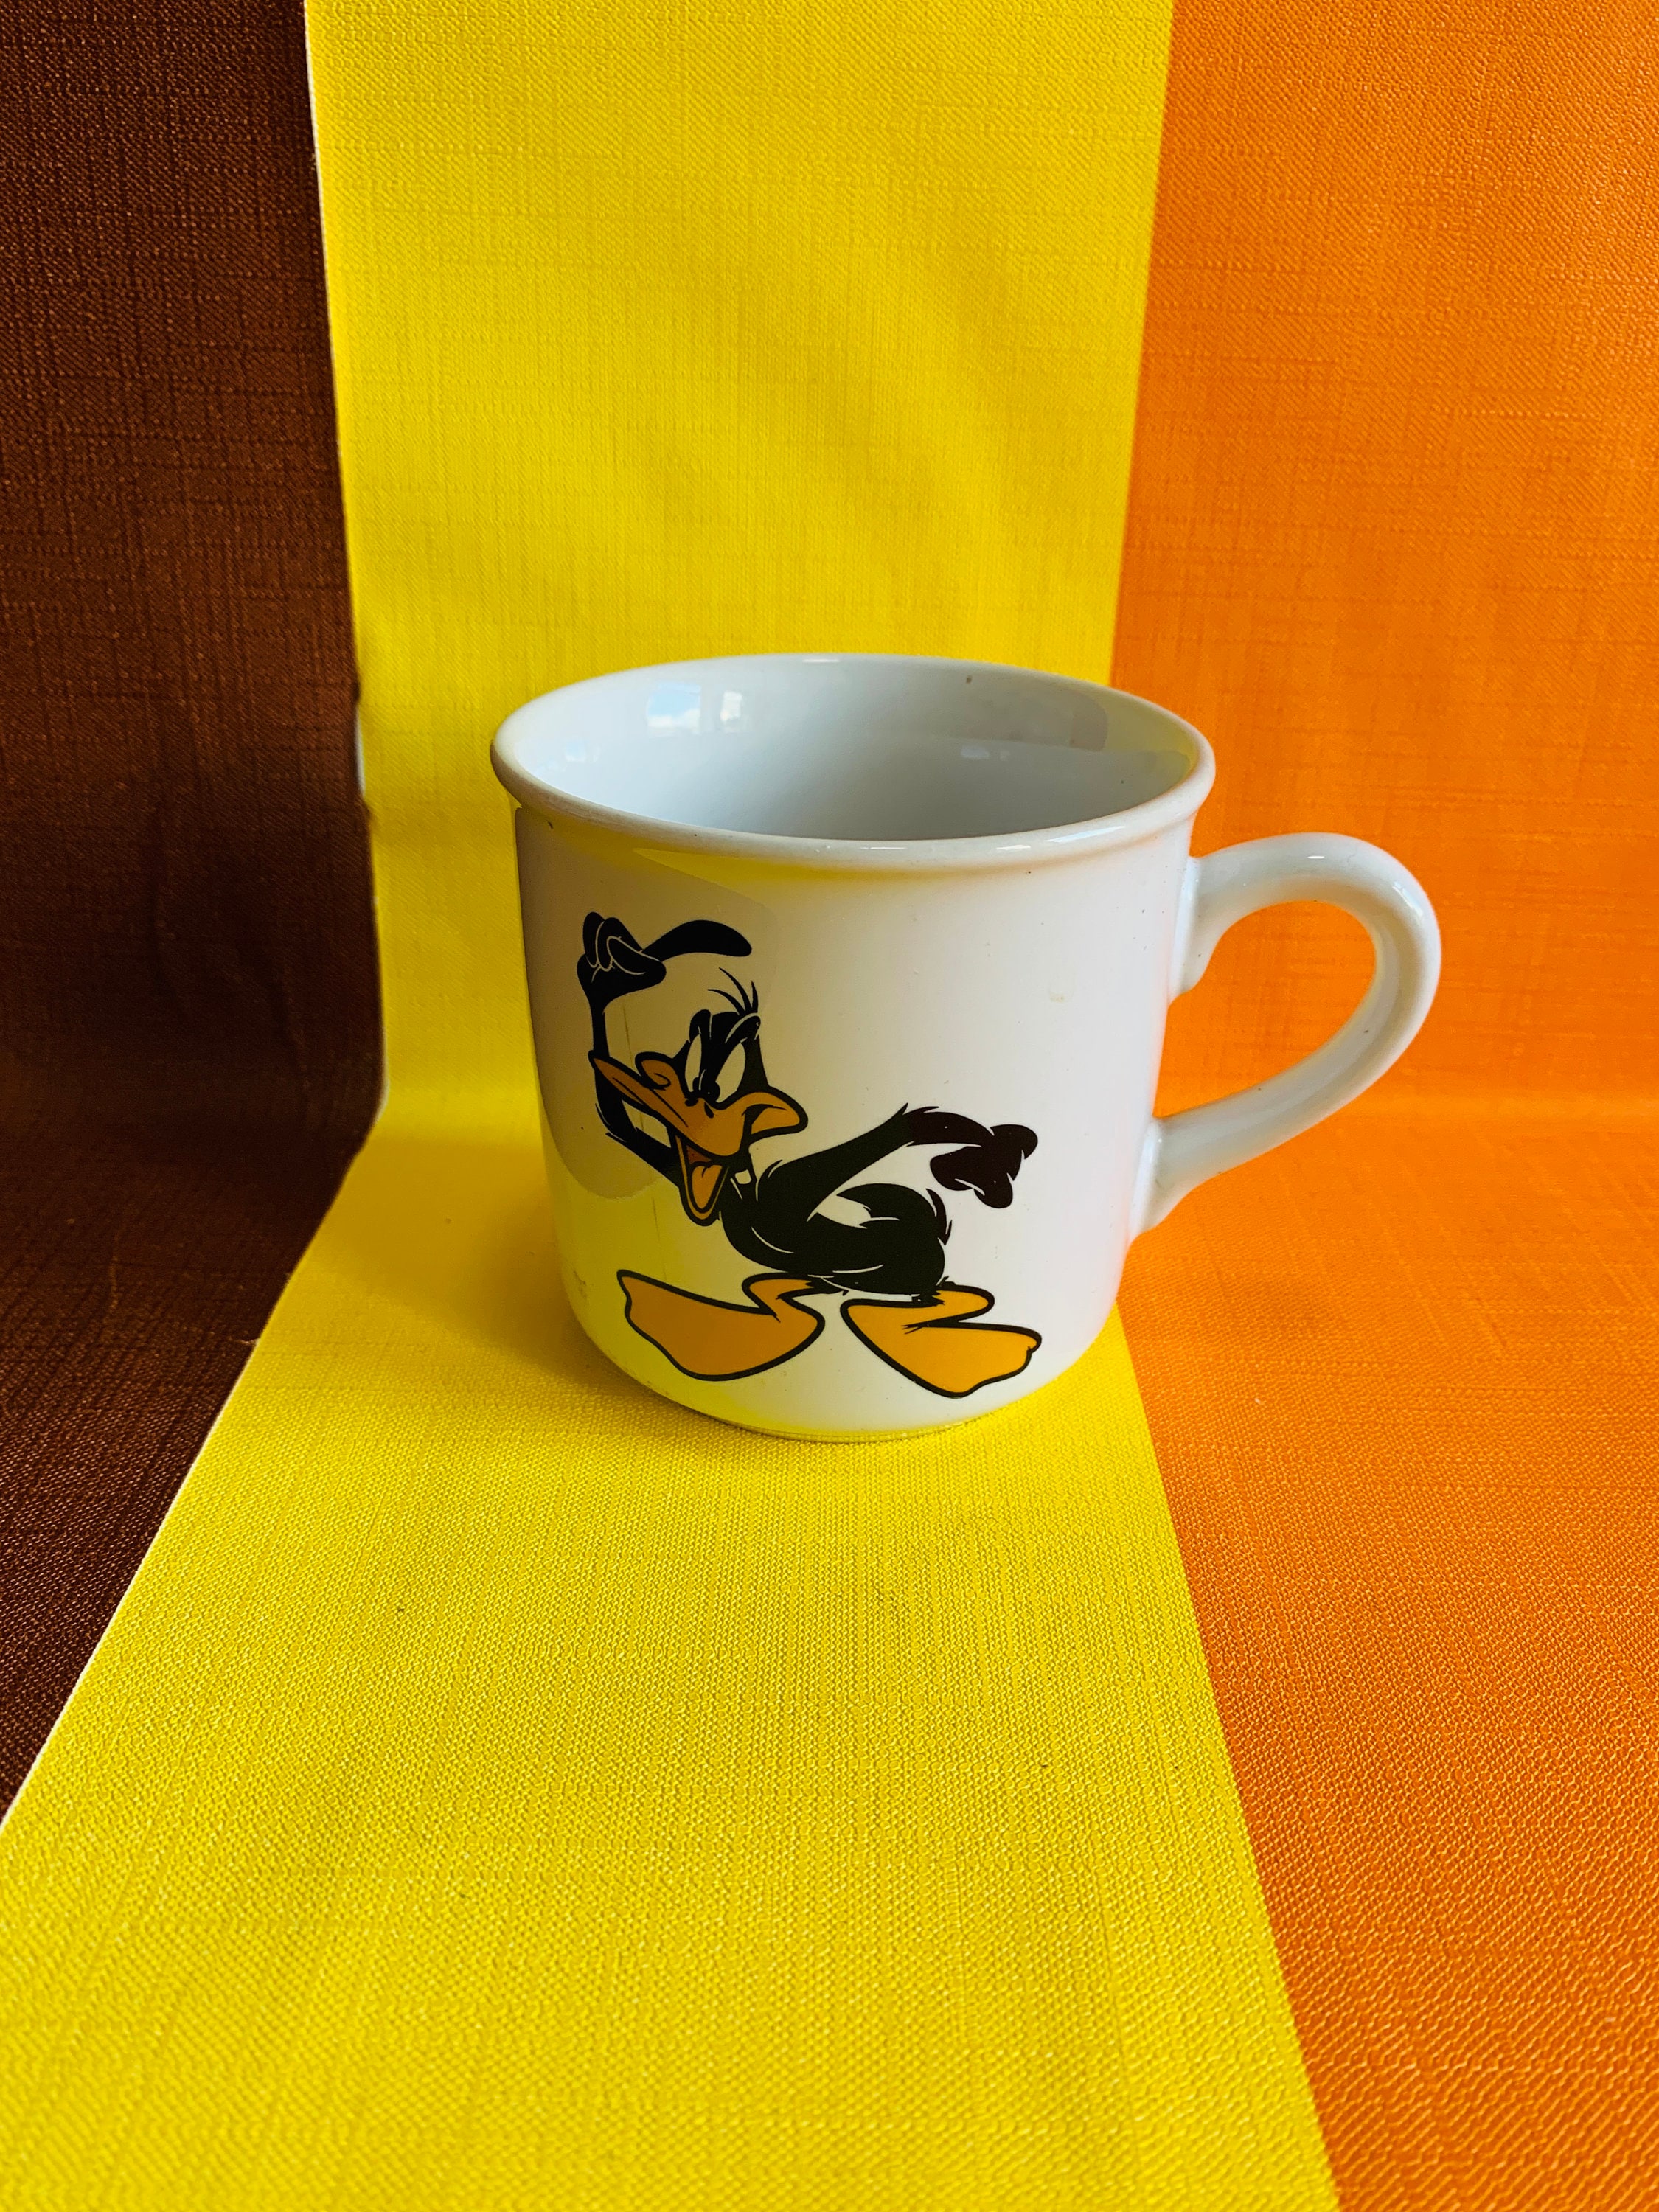 Walt Disney World 32 oz Donald Duck coffee mug NEW